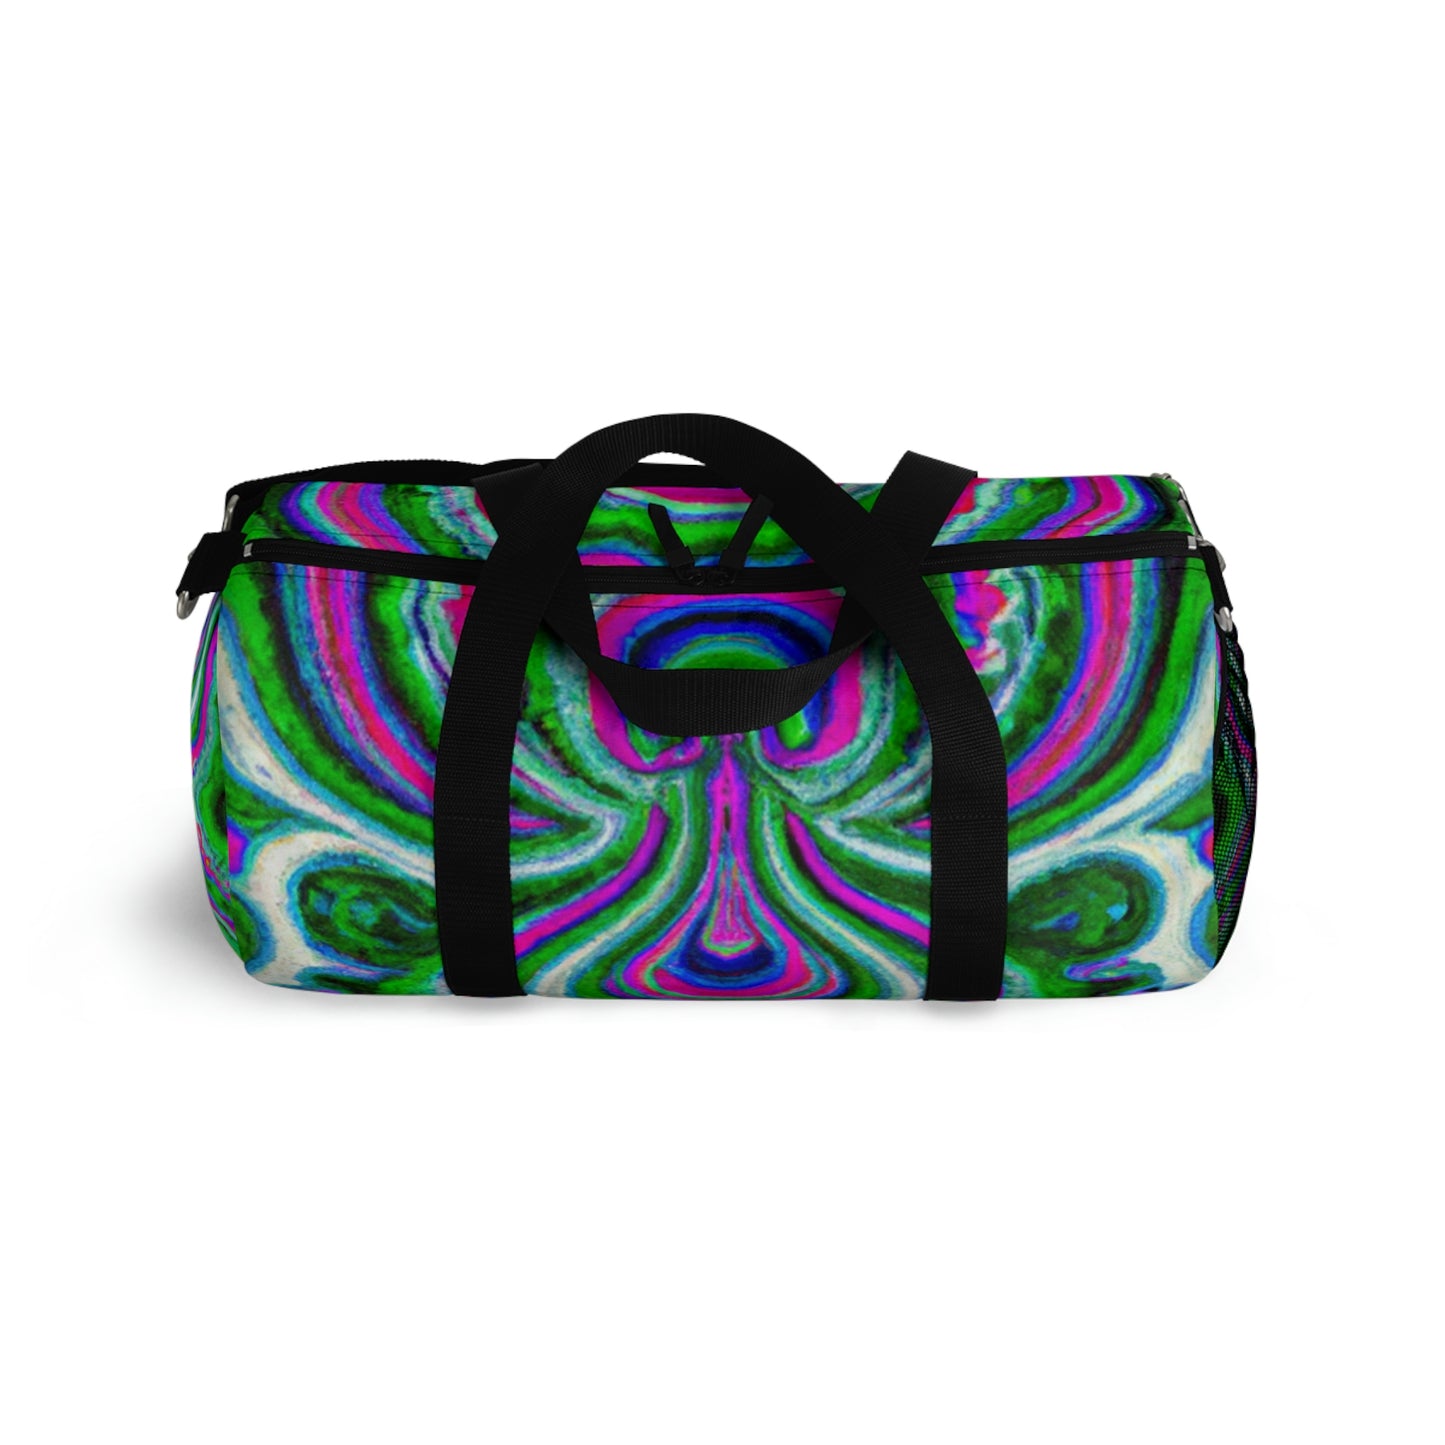 Tivona - Psychedelic Duffel Bag